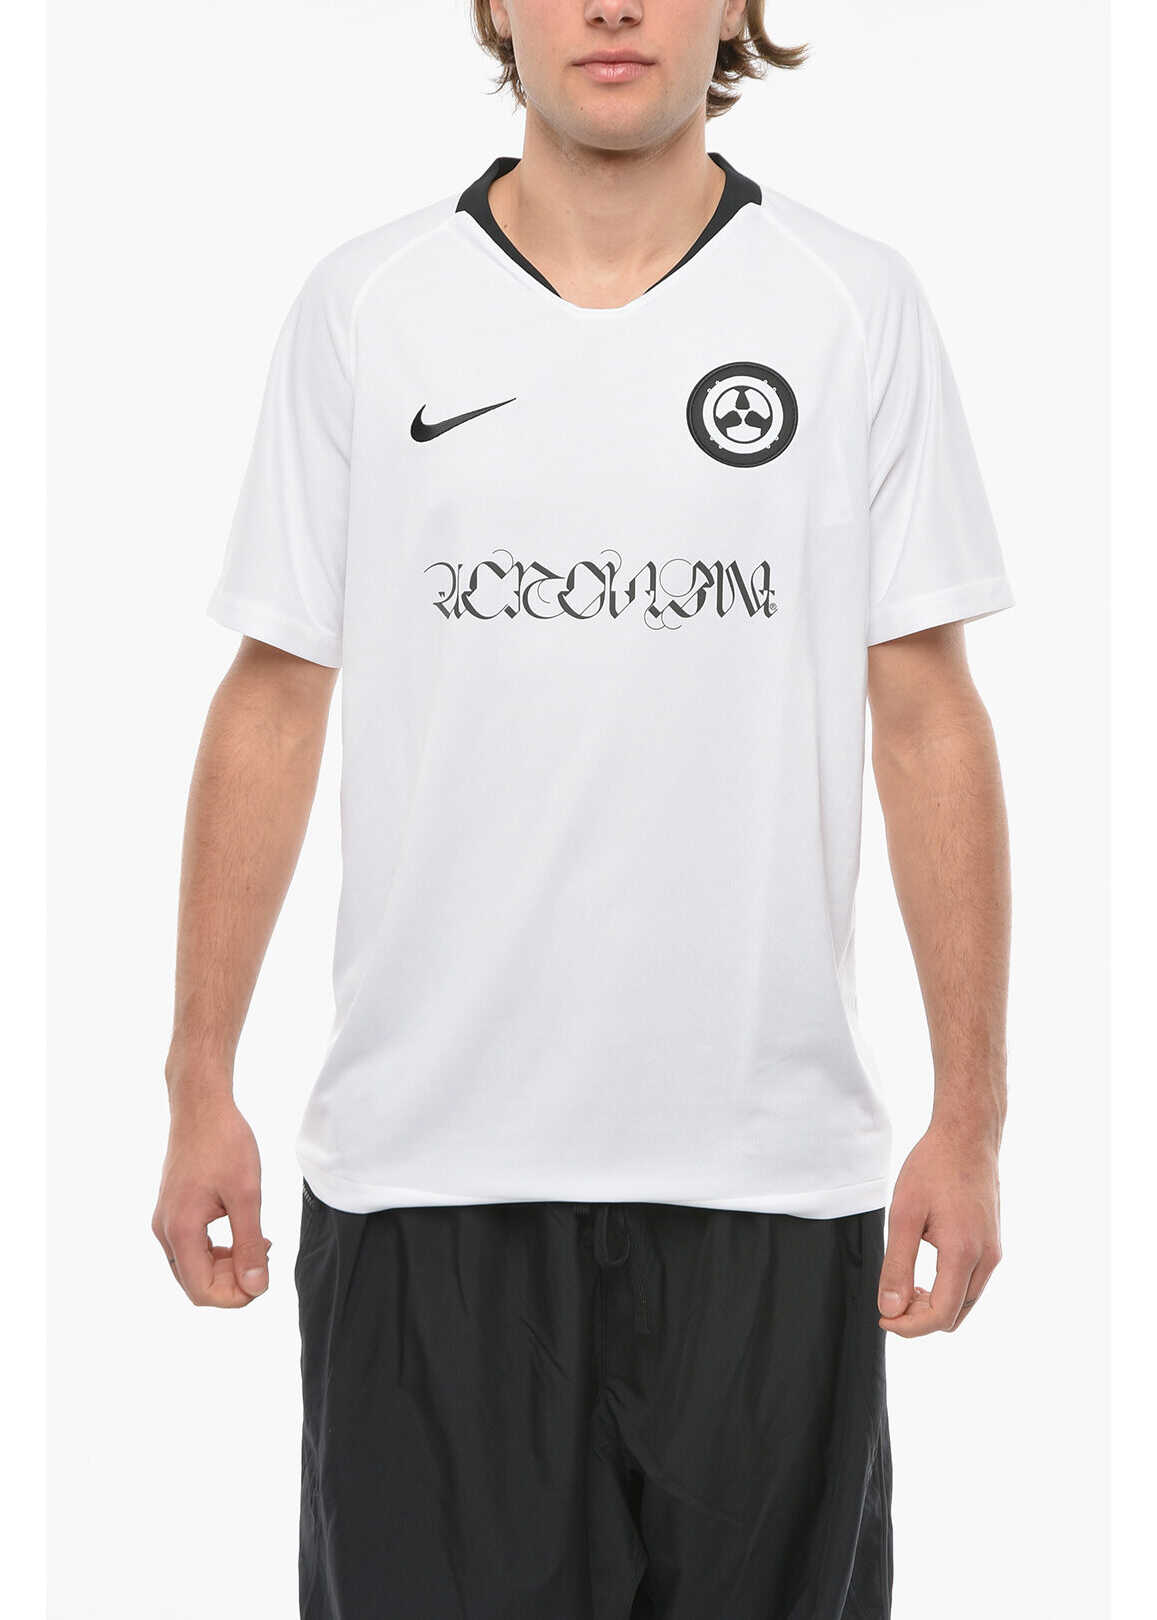 Nike Acronymr Sport Crew-Neck T-Shirt Black & White